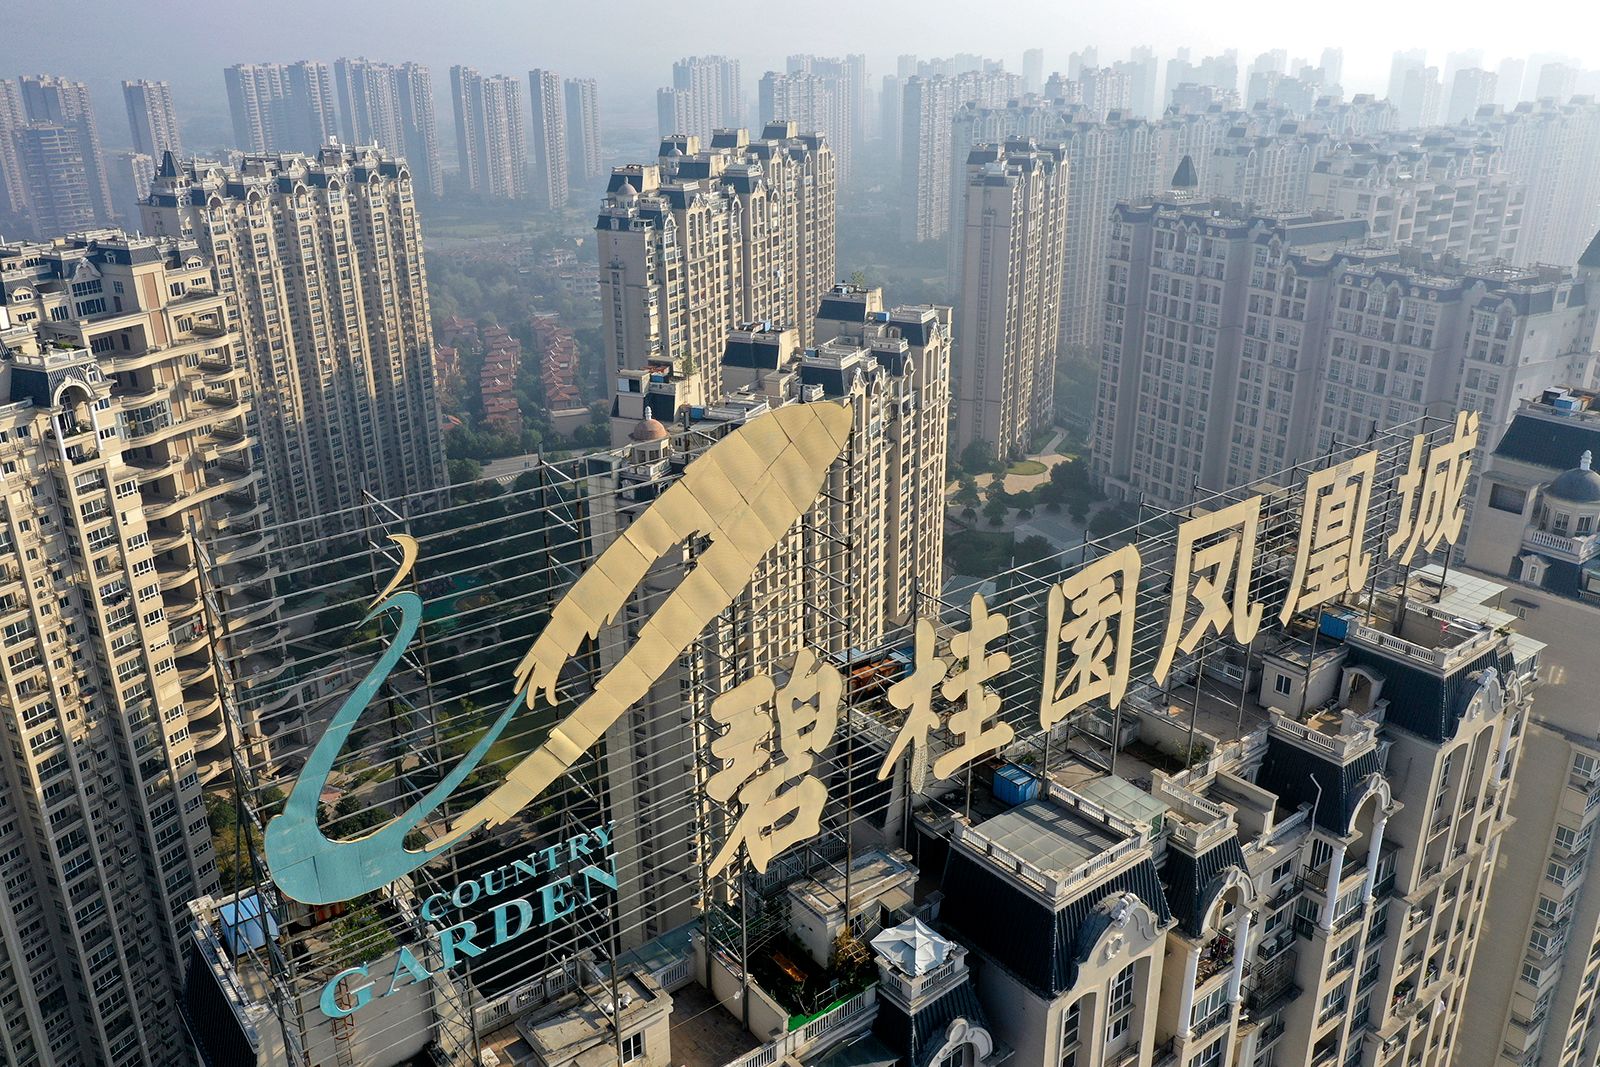 China’s property crisis deepens as another huge developer risks default